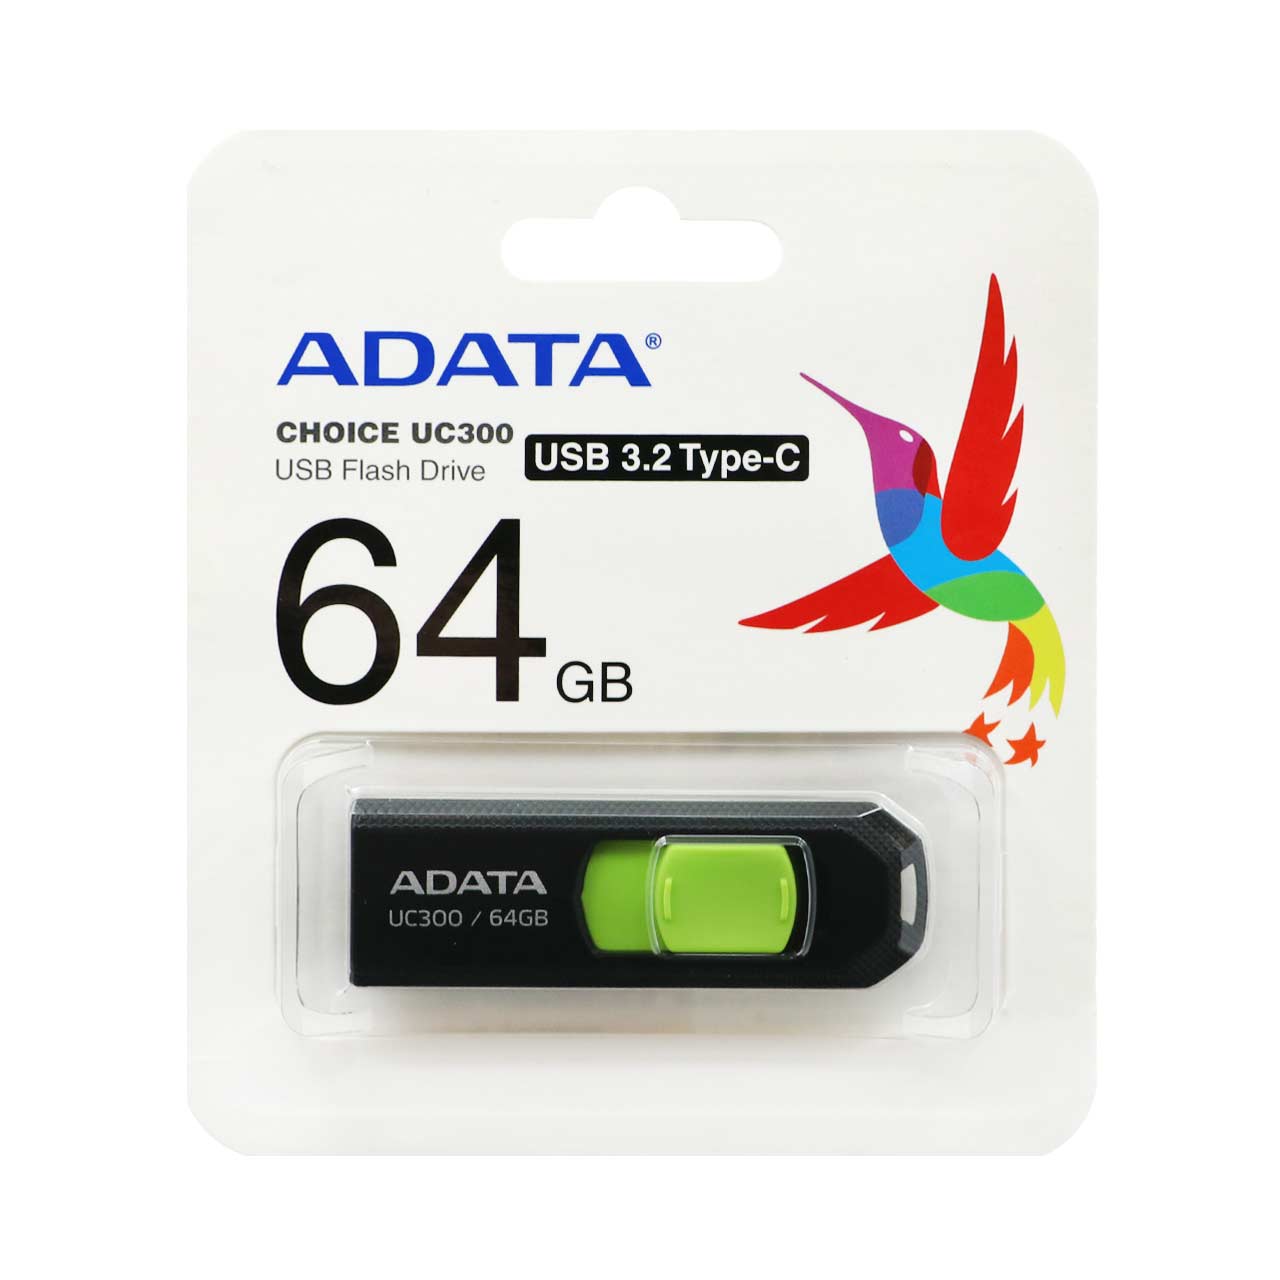 فلش ADATA Choice UC300 USB 3.2 Type-C Flash Memory - 64GB